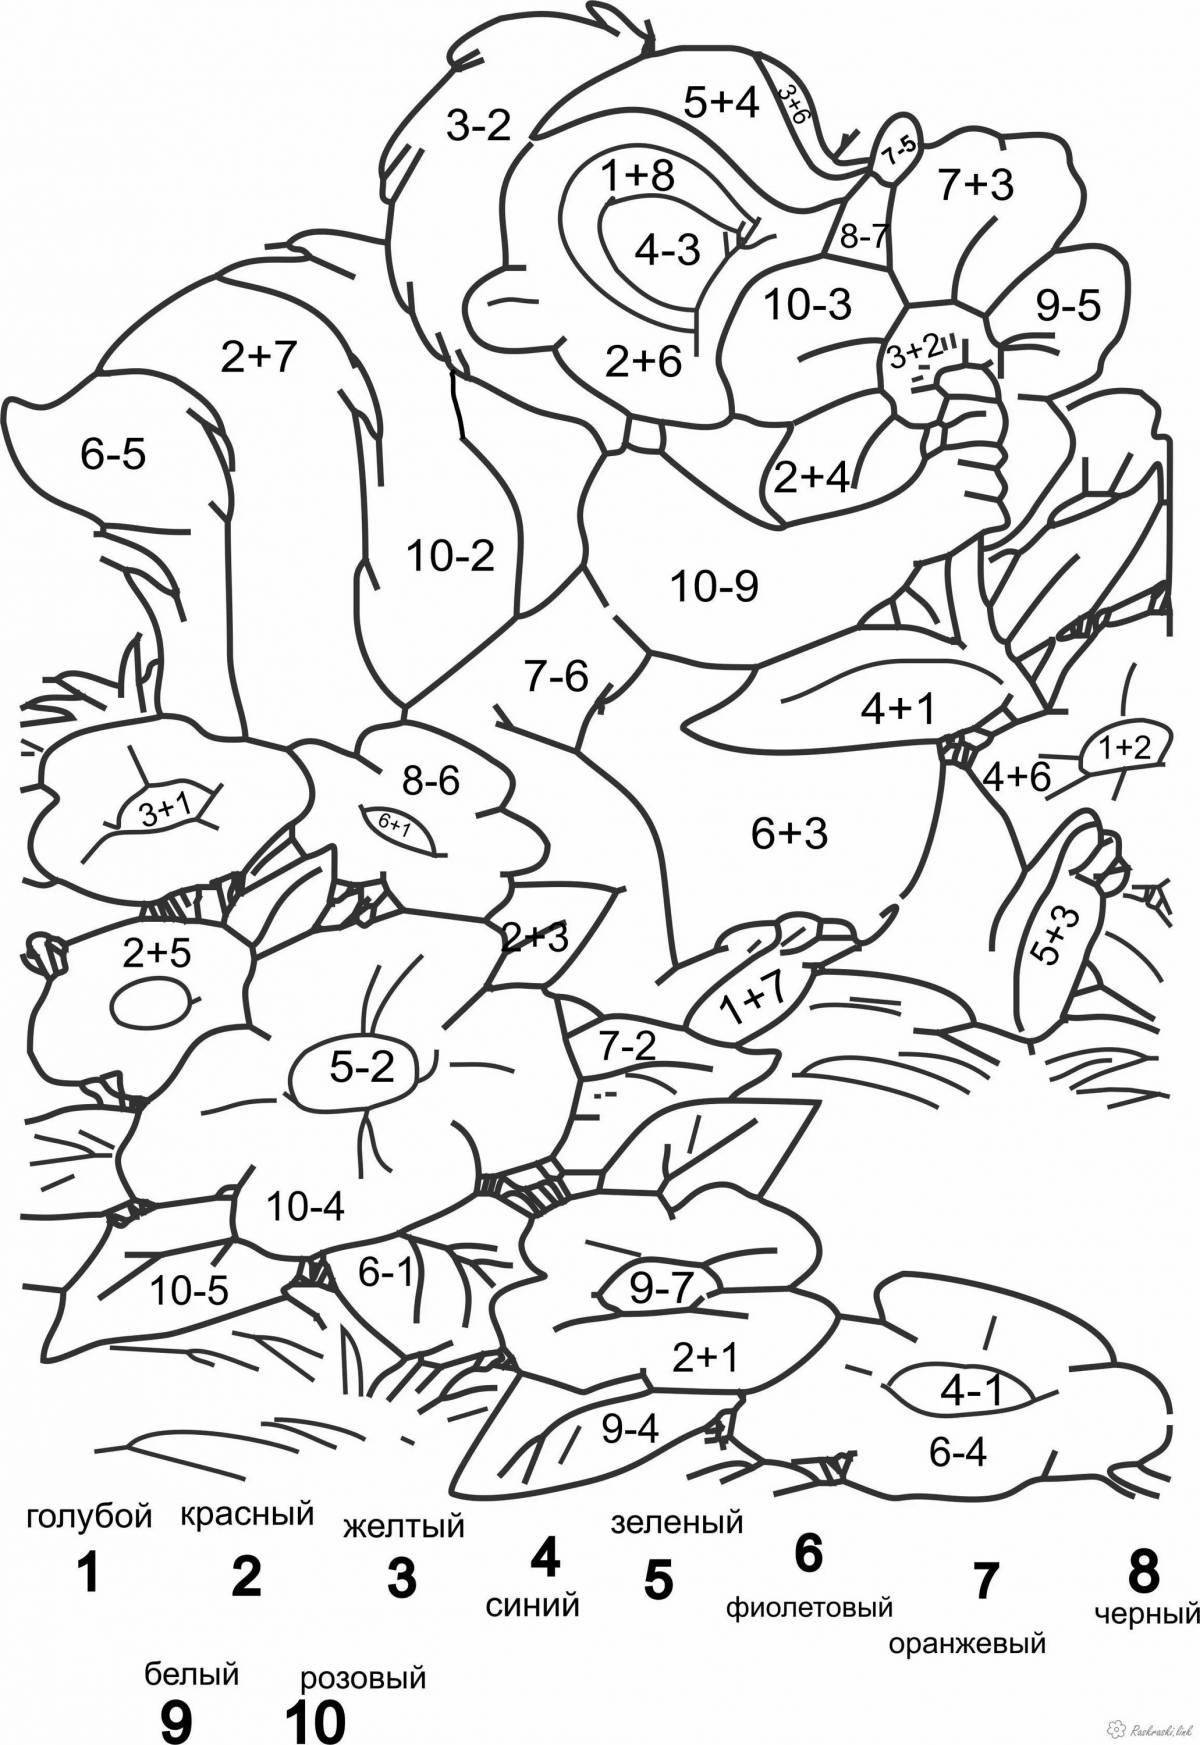 Fun math coloring book for preschoolers